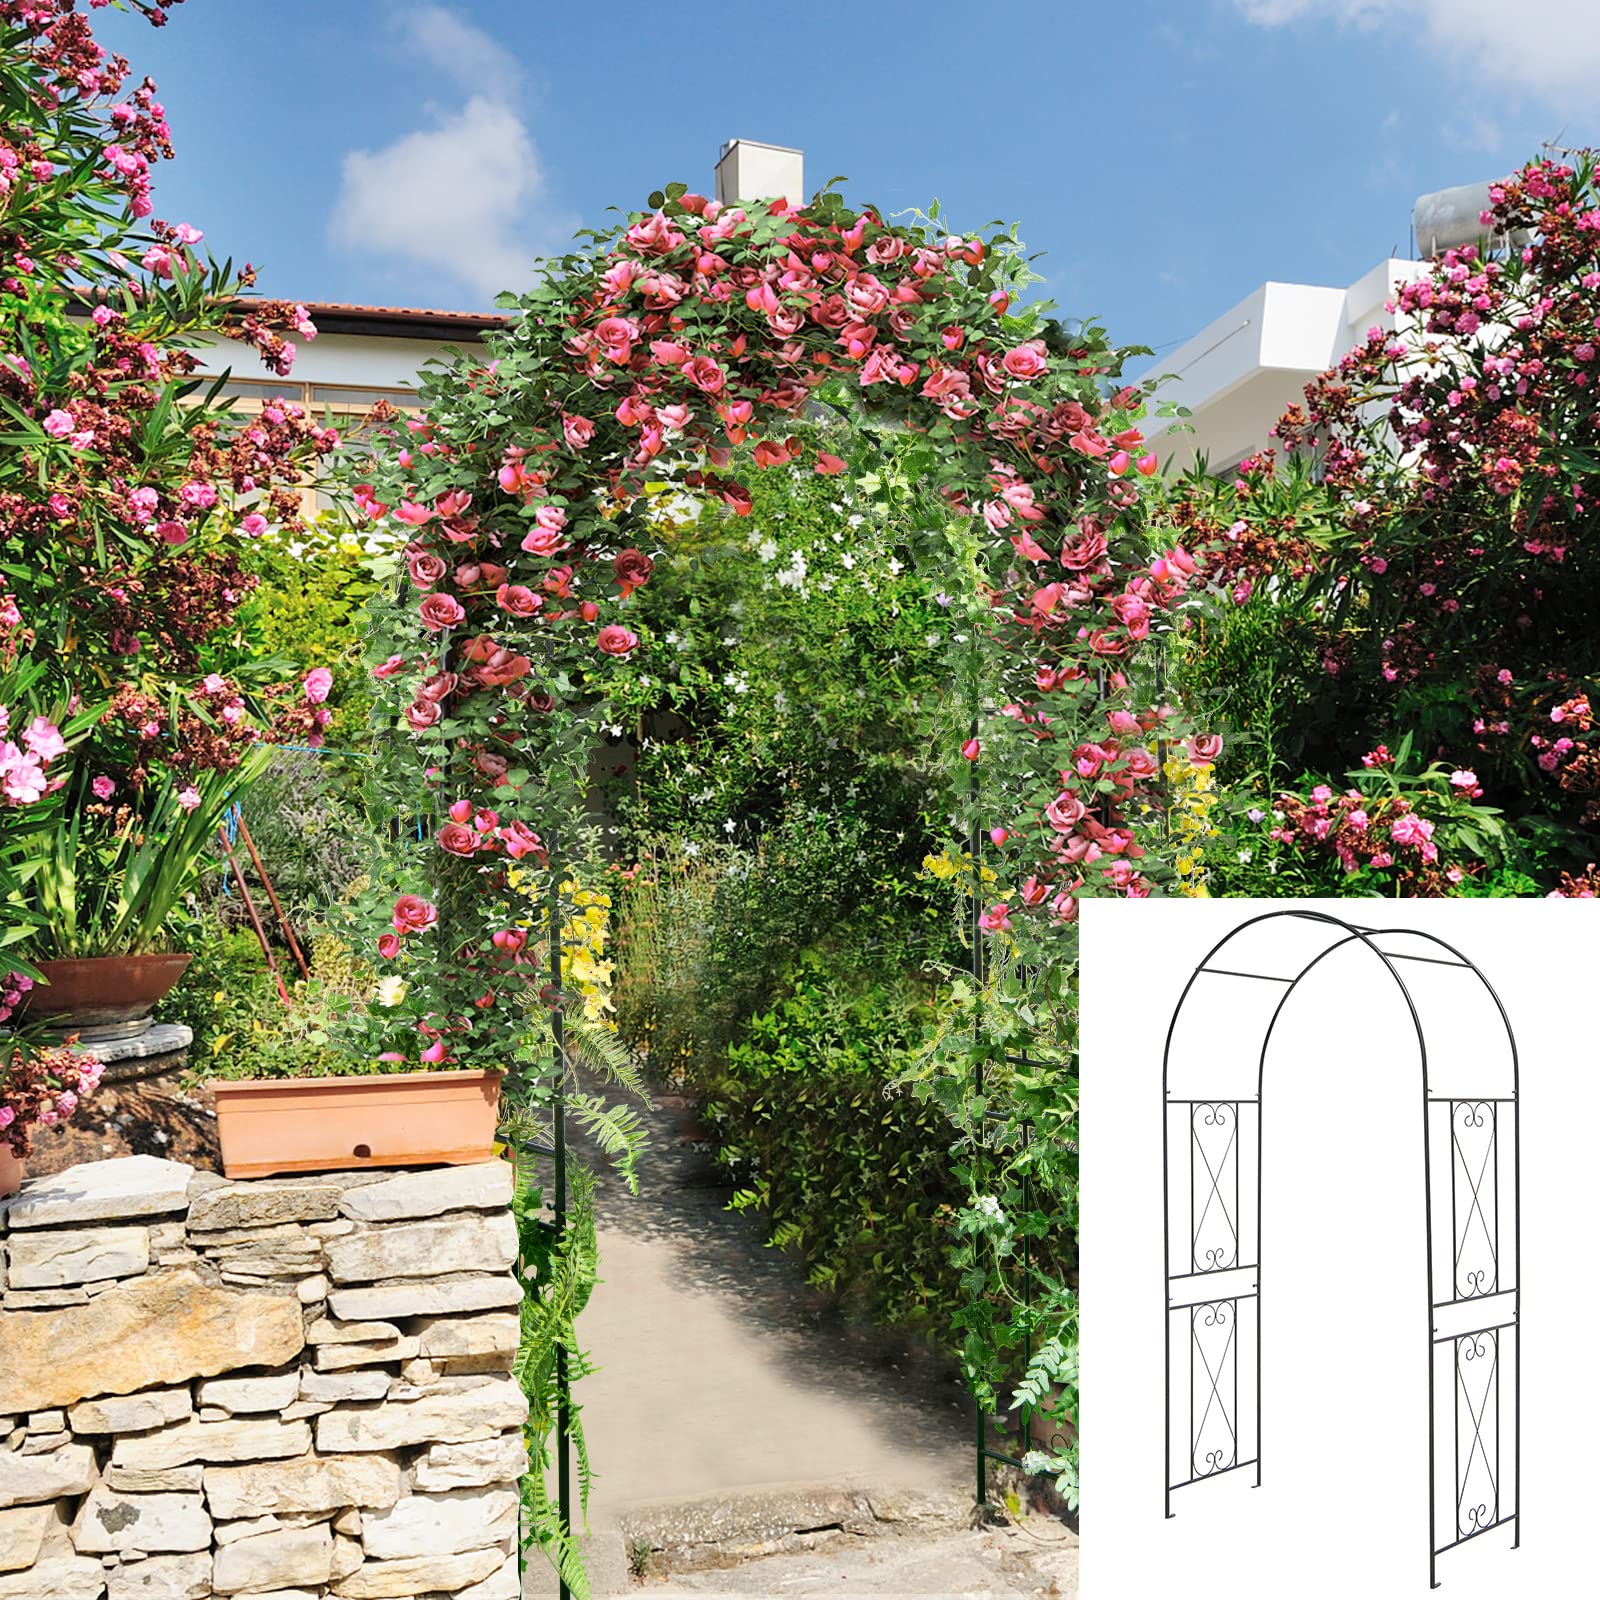 Giantex Garden Arbors Trellises, 7.2FT Metal Garden Arch for Climbing Plants Roses